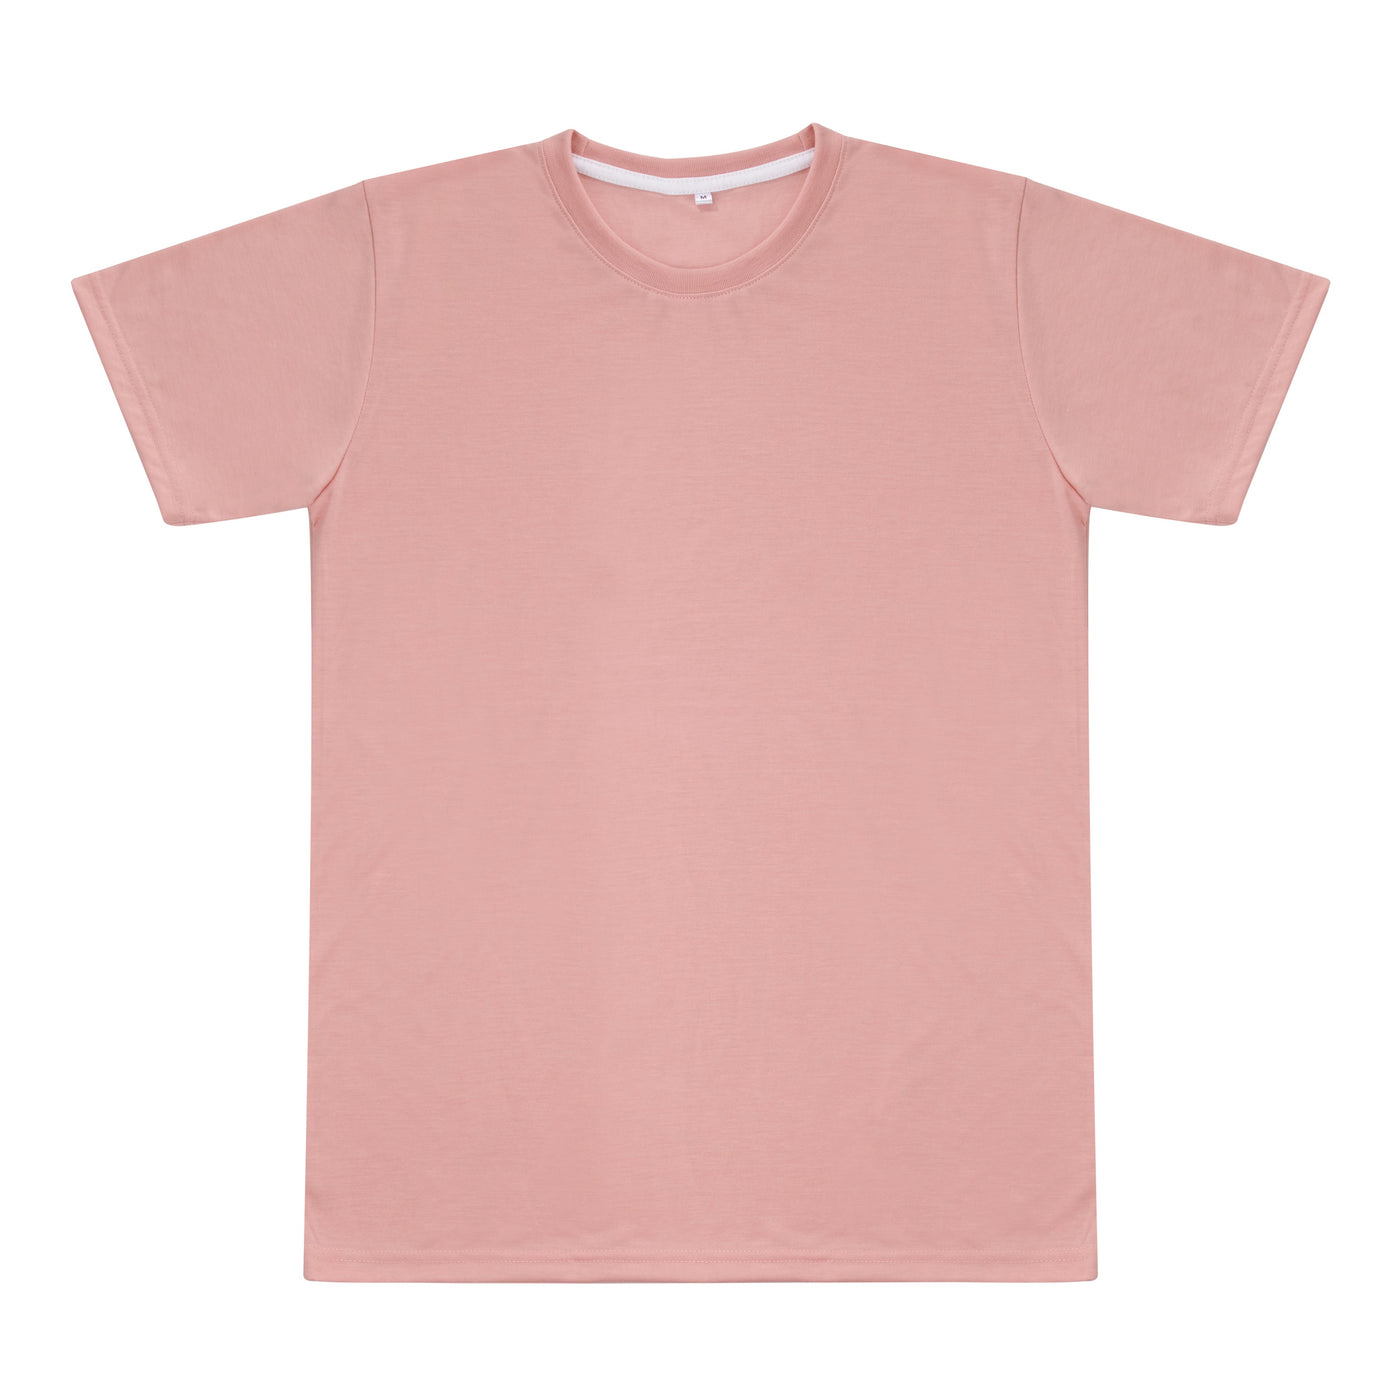 Kids Unisex Sublimation Shirts 12 / Vintage Pink